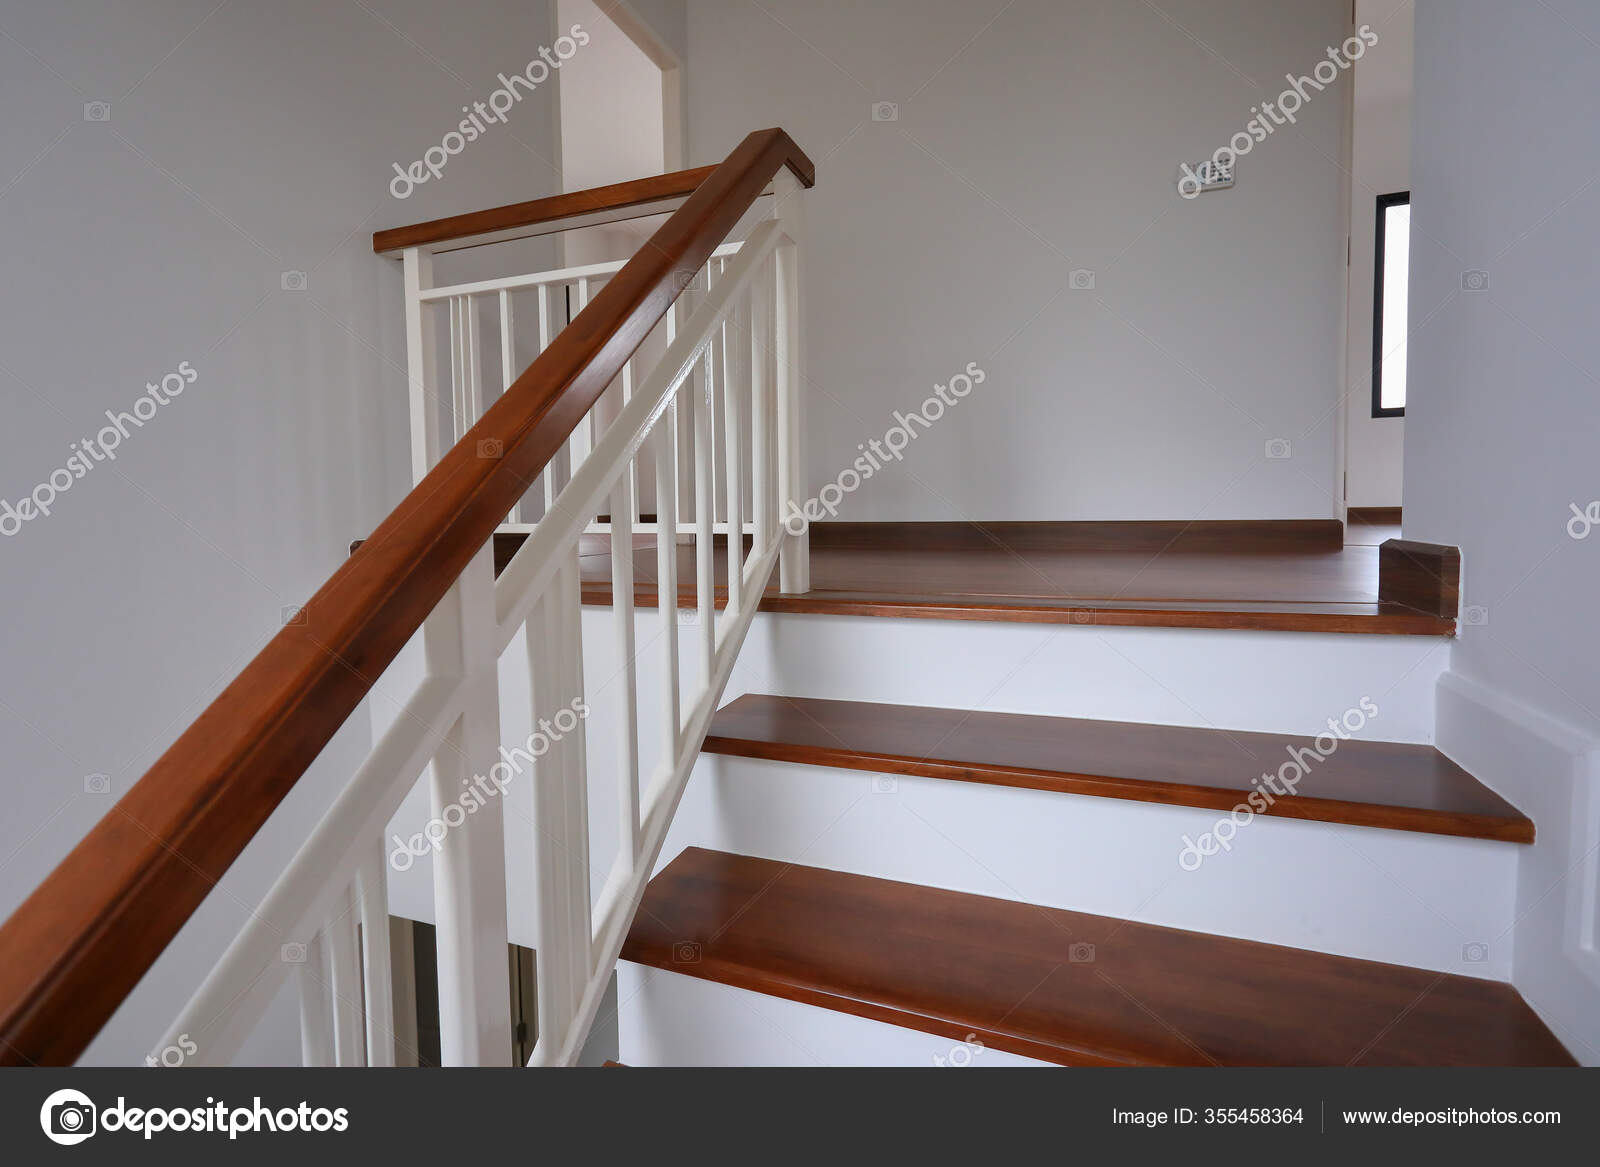 https://st3.depositphotos.com/3562663/35545/i/1600/depositphotos_355458364-stock-photo-brown-wooden-stair-white-steel.jpg